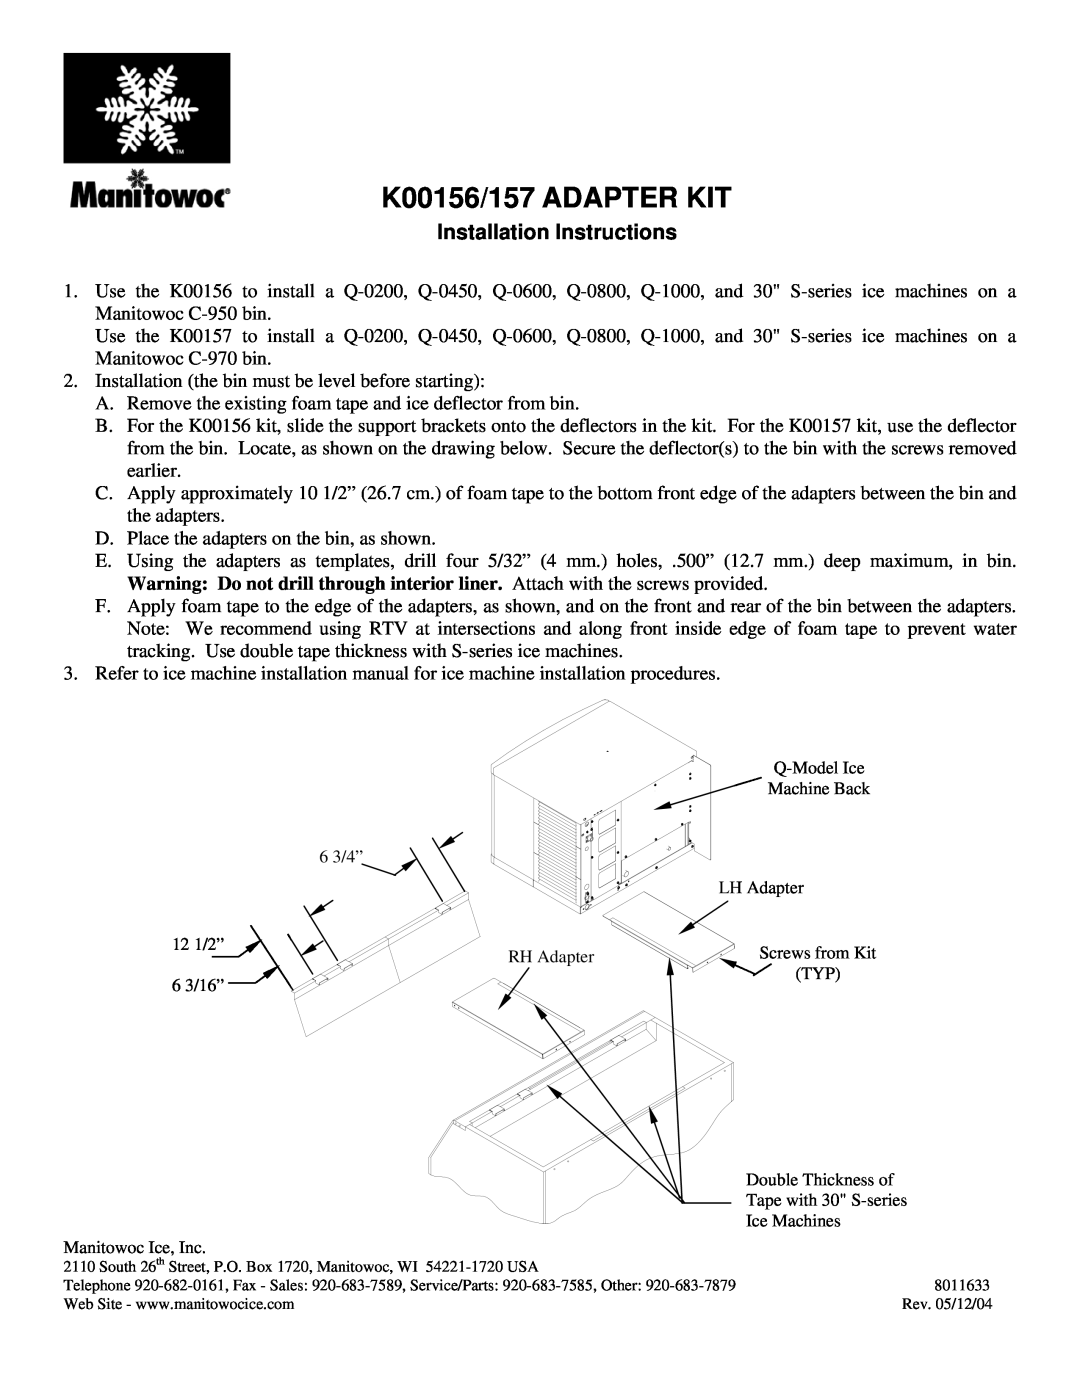 Manitowoc Ice K00157 installation instructions K00156/157 ADAPTER KIT, Installation Instructions 